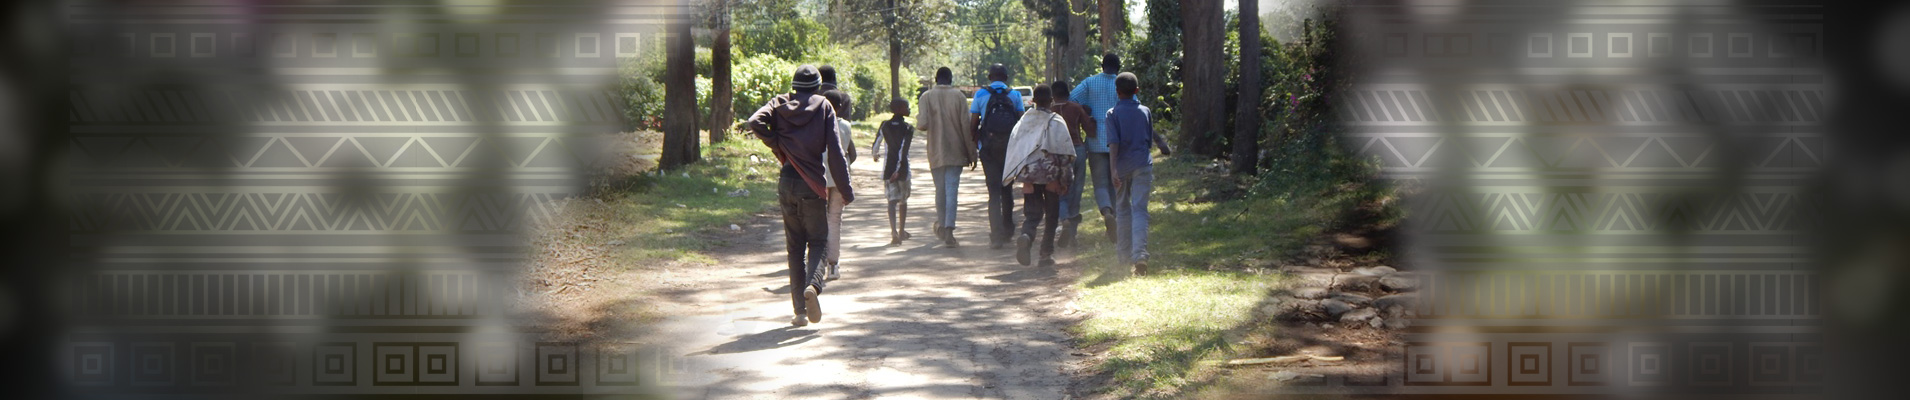 TAT helpinghomless children in Nakuru